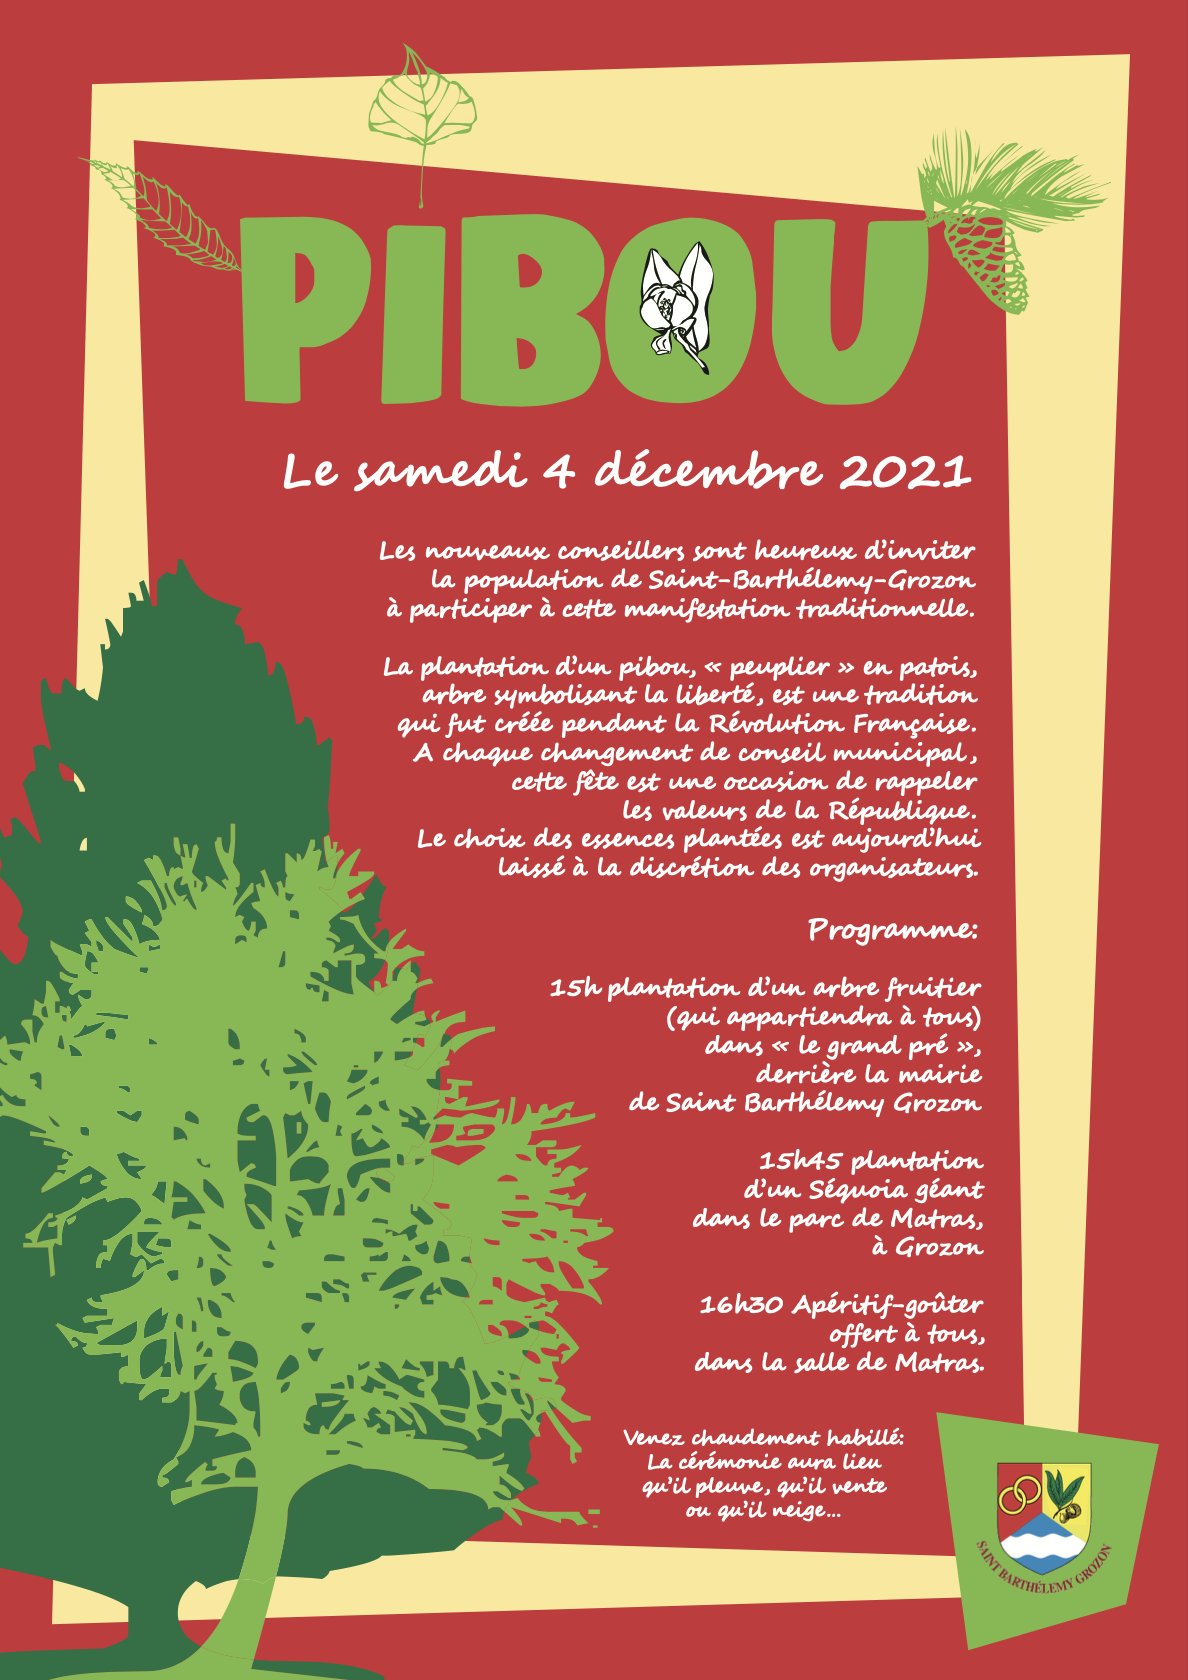 Pibou invitation 04 dec 21